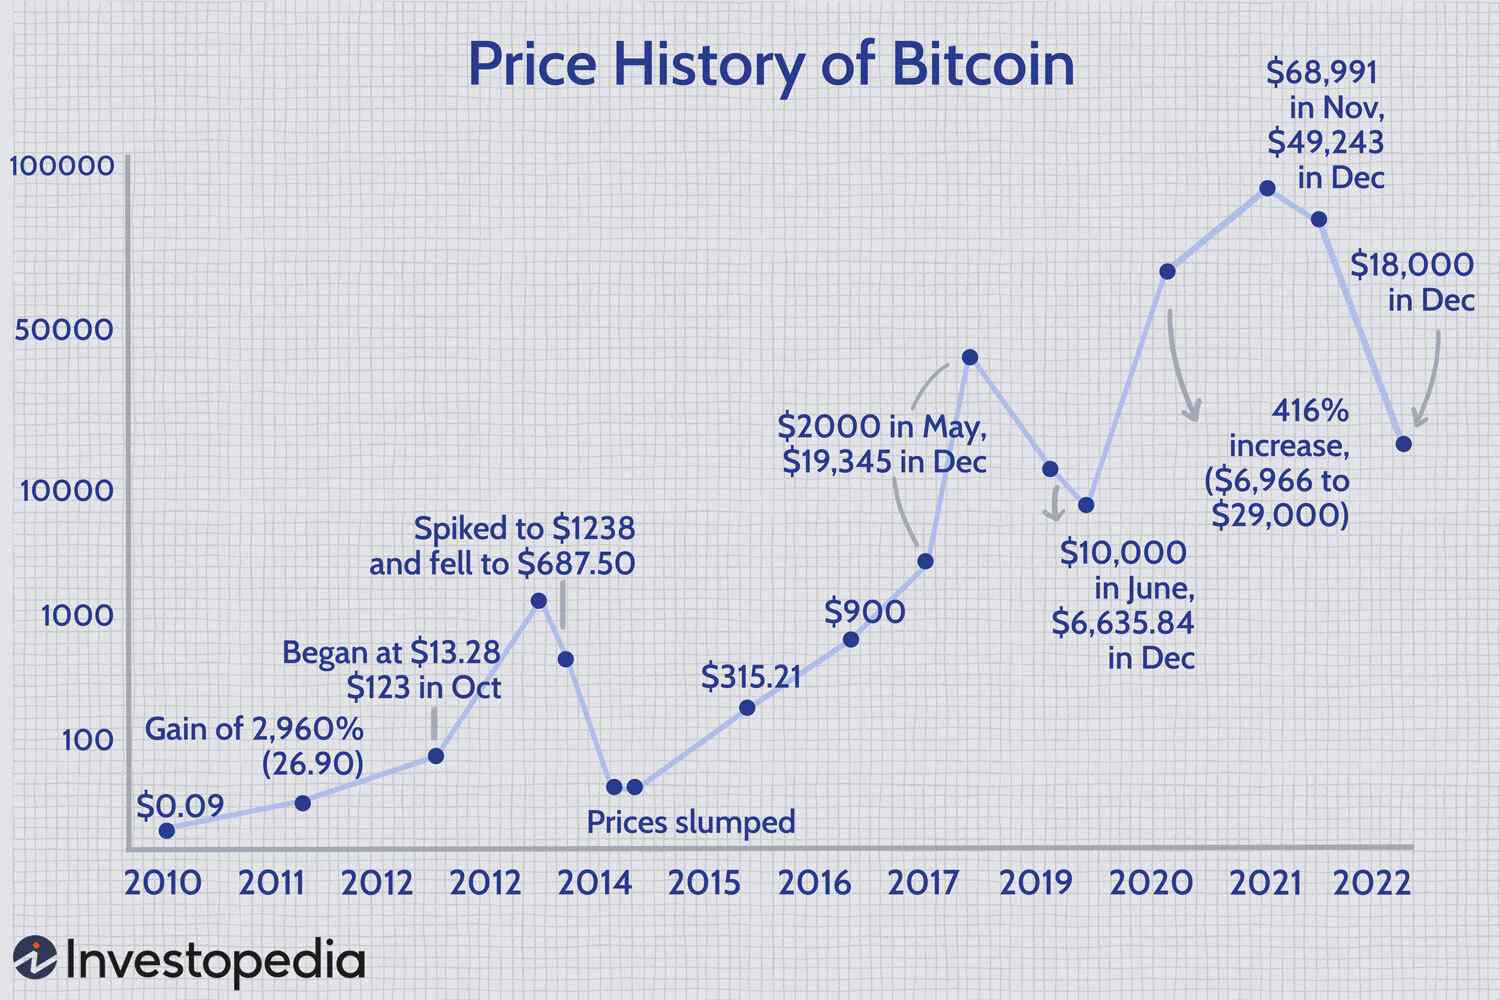 BTC-USD Interactive Stock Chart | Bitcoin USD Stock - Yahoo Finance